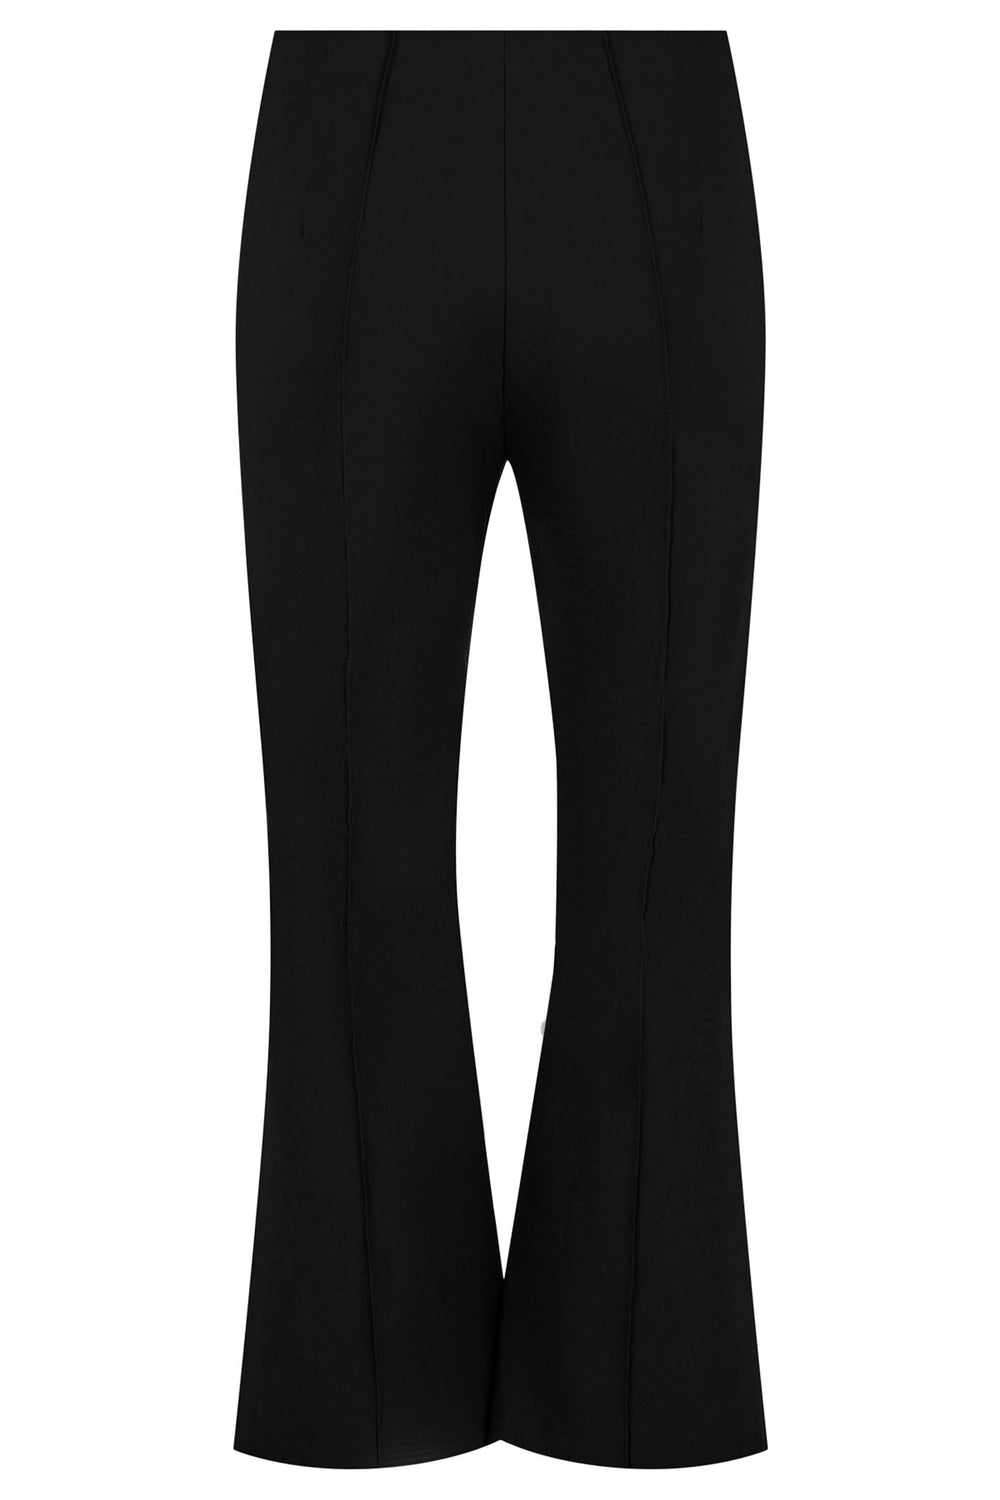 Robell 53421-5499-90 Joella Black Kick Flare Pull-On 65cm Trousers - Olivia Grace Fashion